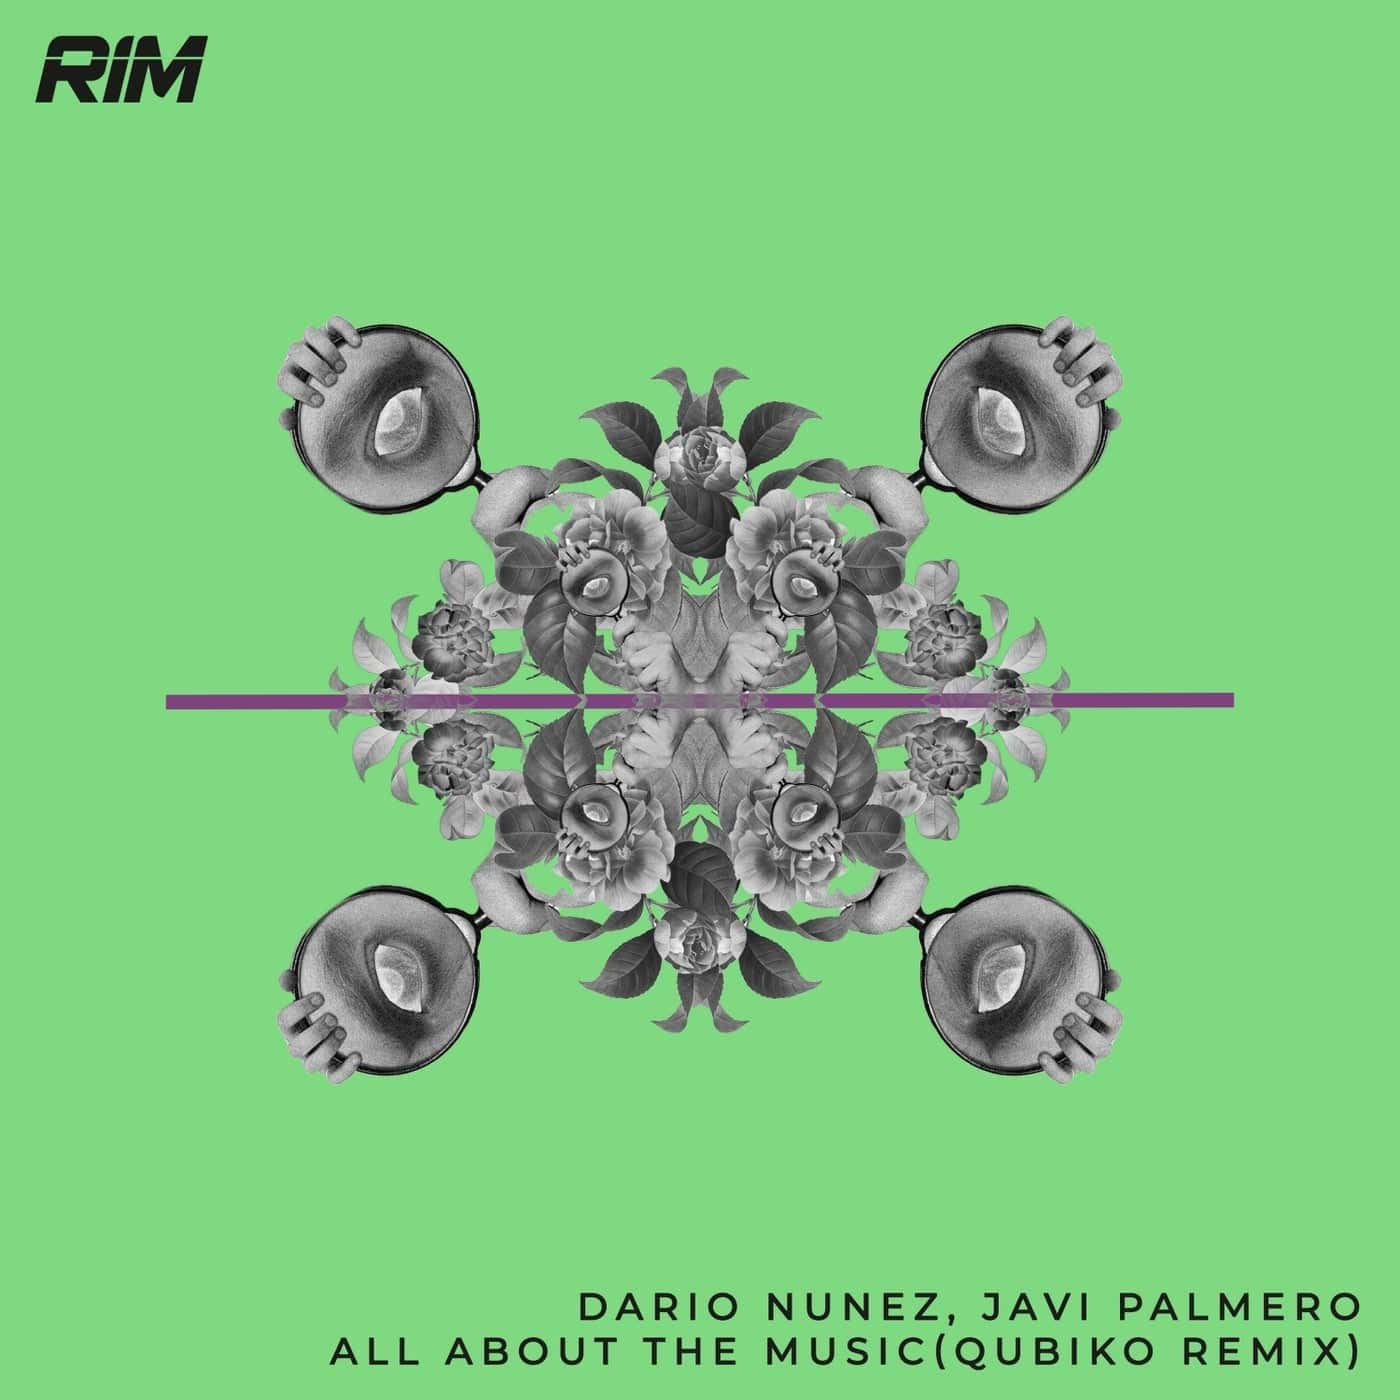 image cover: Dario Nunez, Javi Palmero - All About the Music (Qubiko Remix) / RIM115